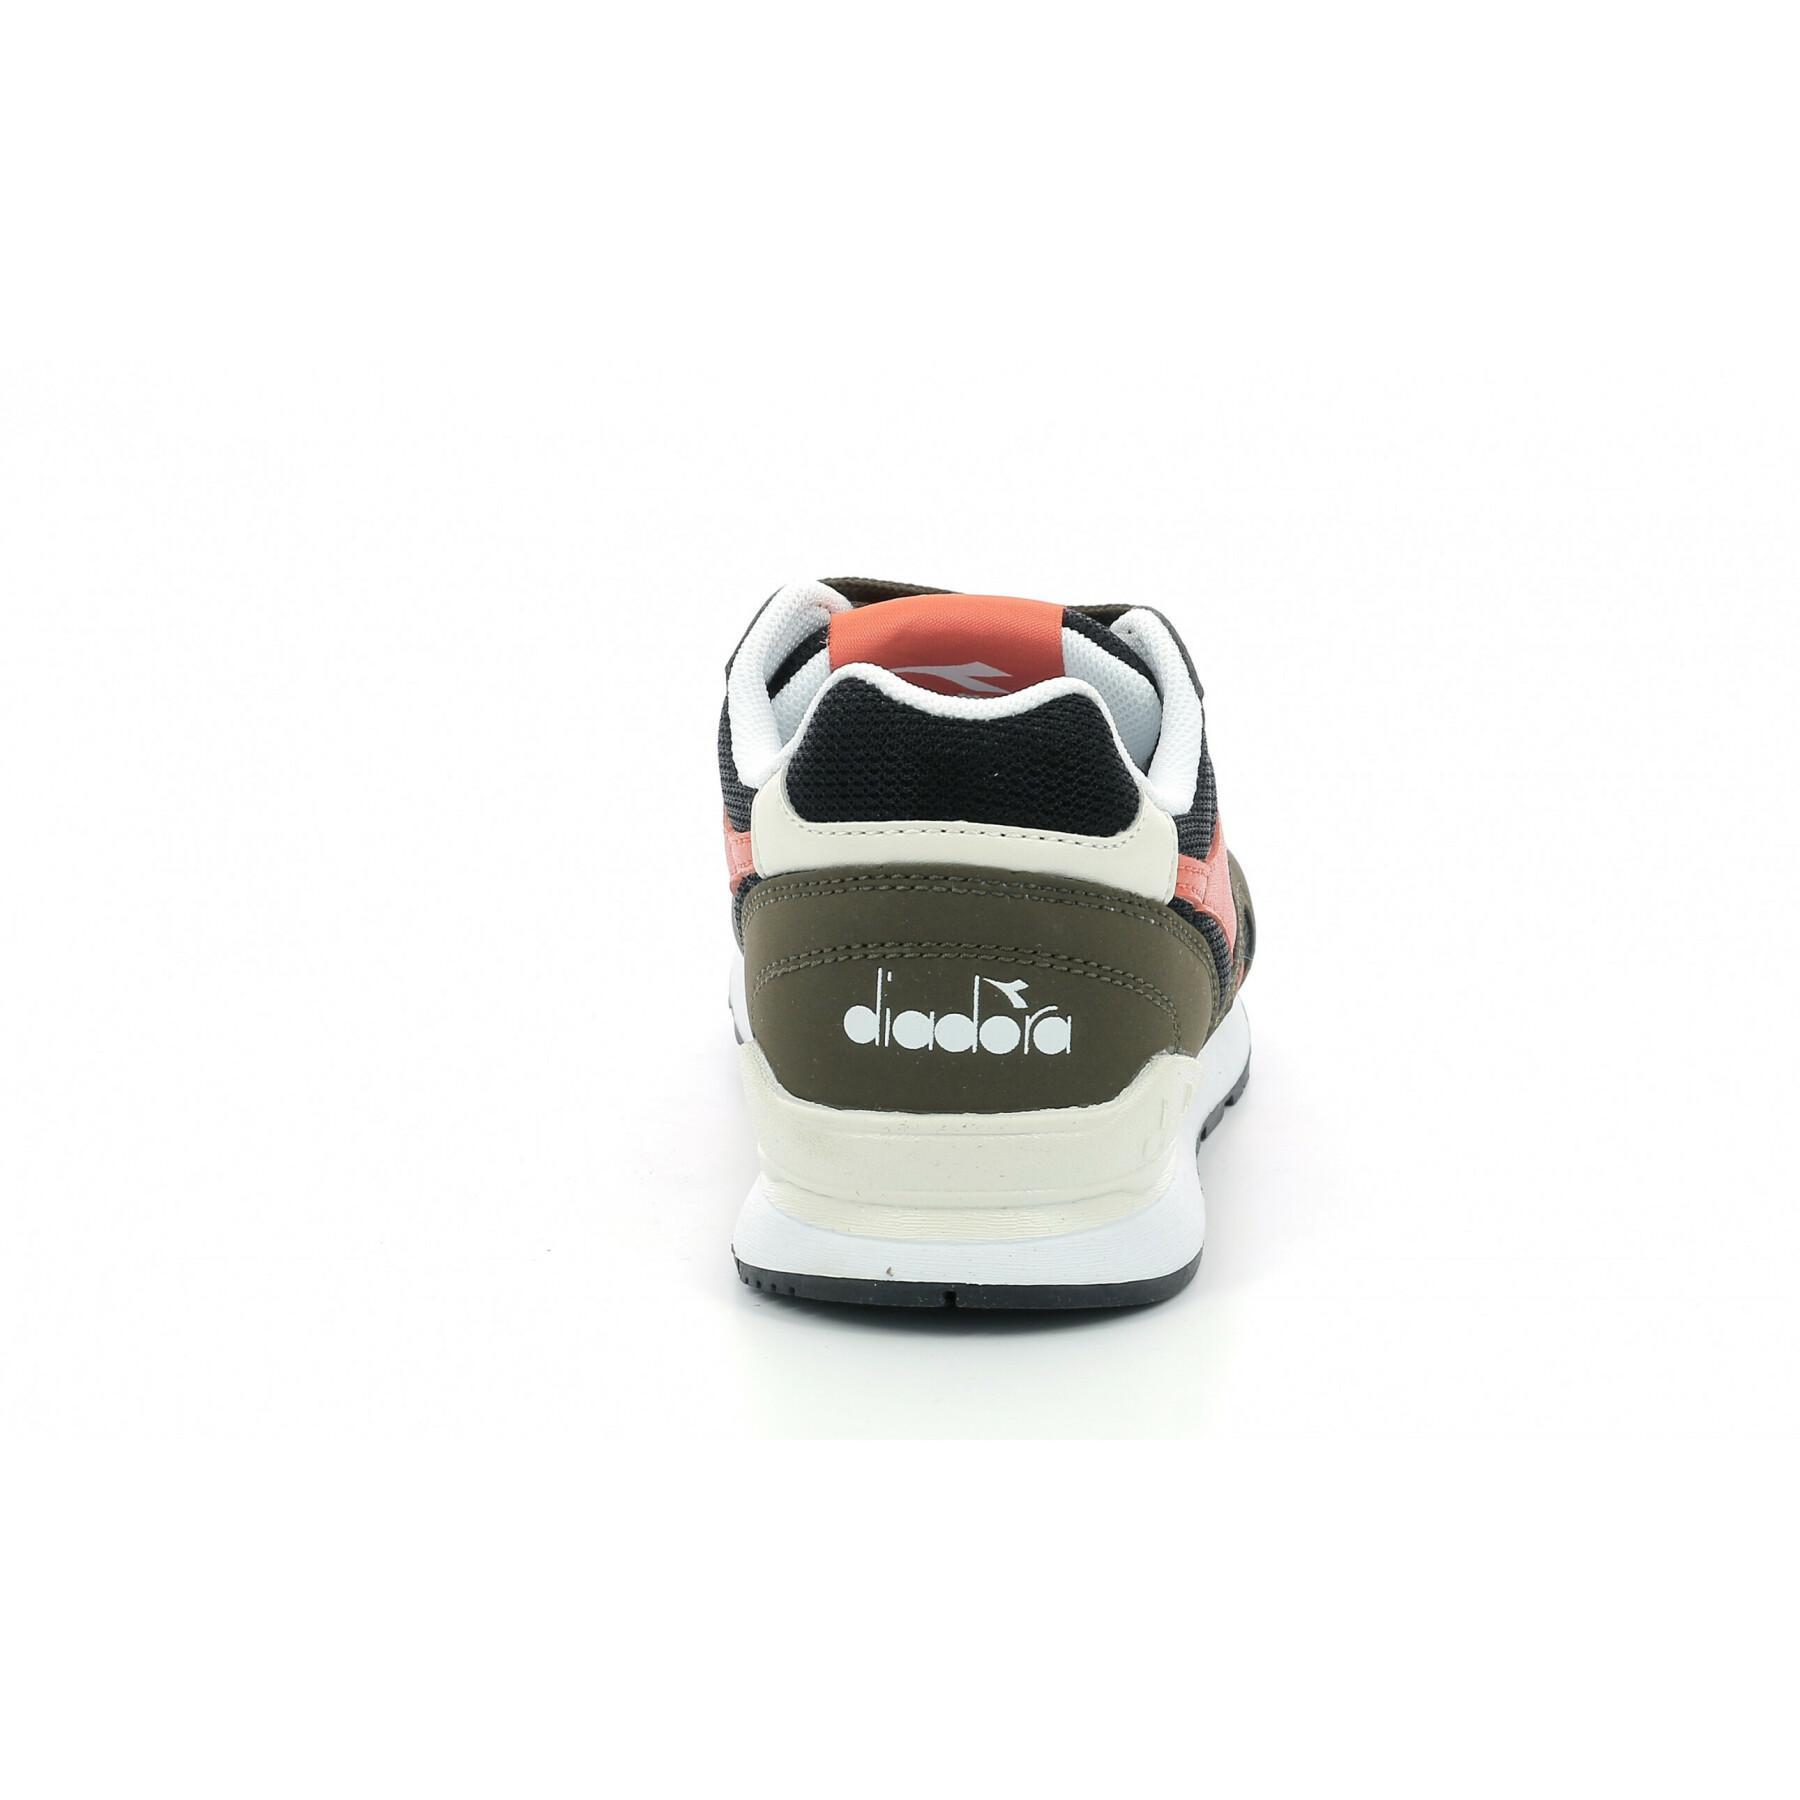 Children's sneakers Diadora N.92 Ps